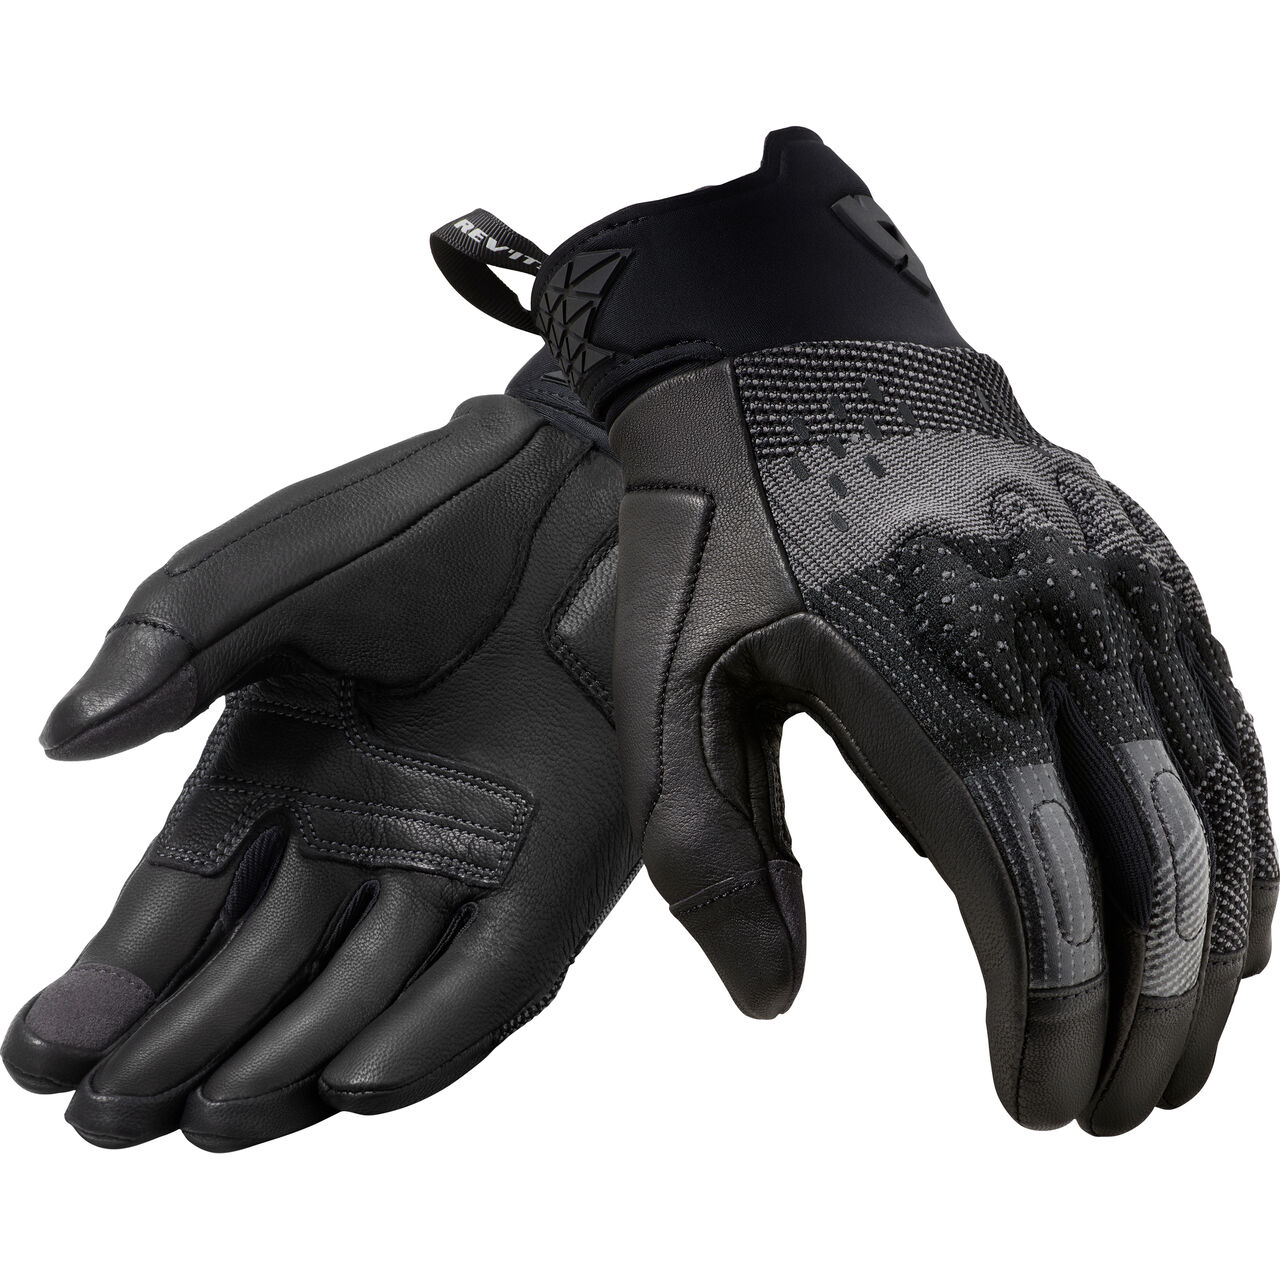 Kinetic Glove black/anthracite